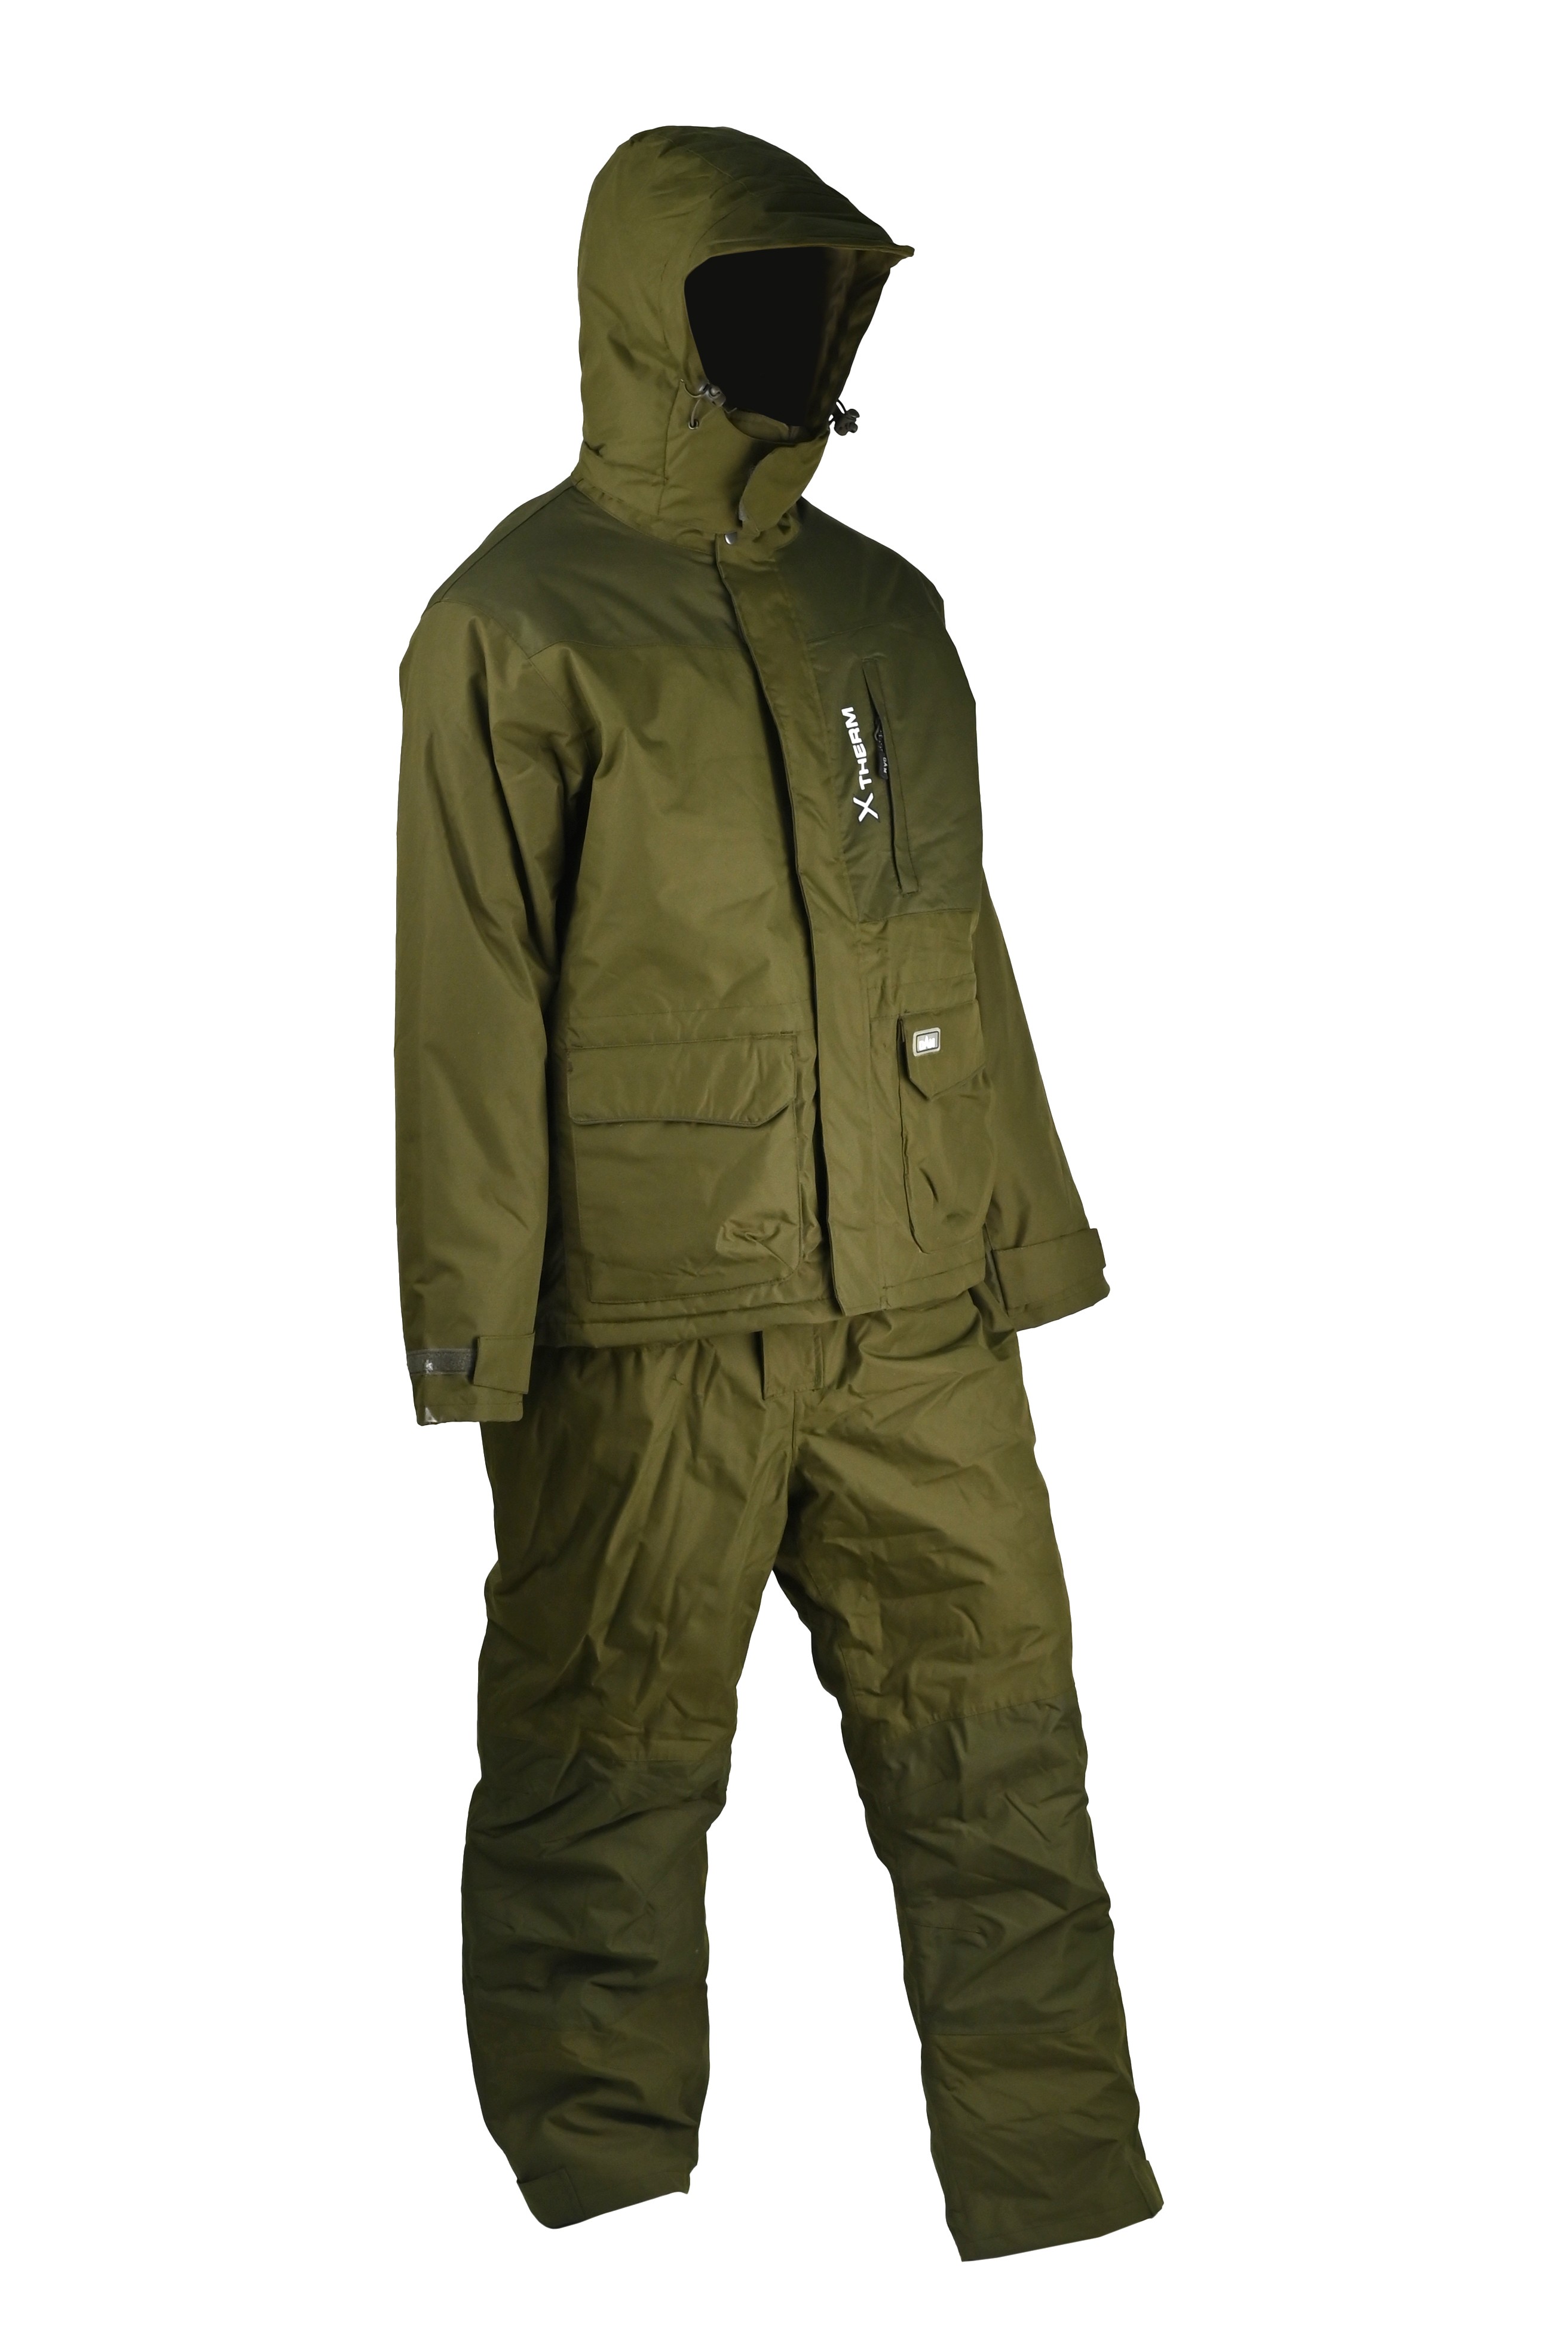 Костюм DAM Xtherm Winter Suit green  ( р.M ) - фото 1